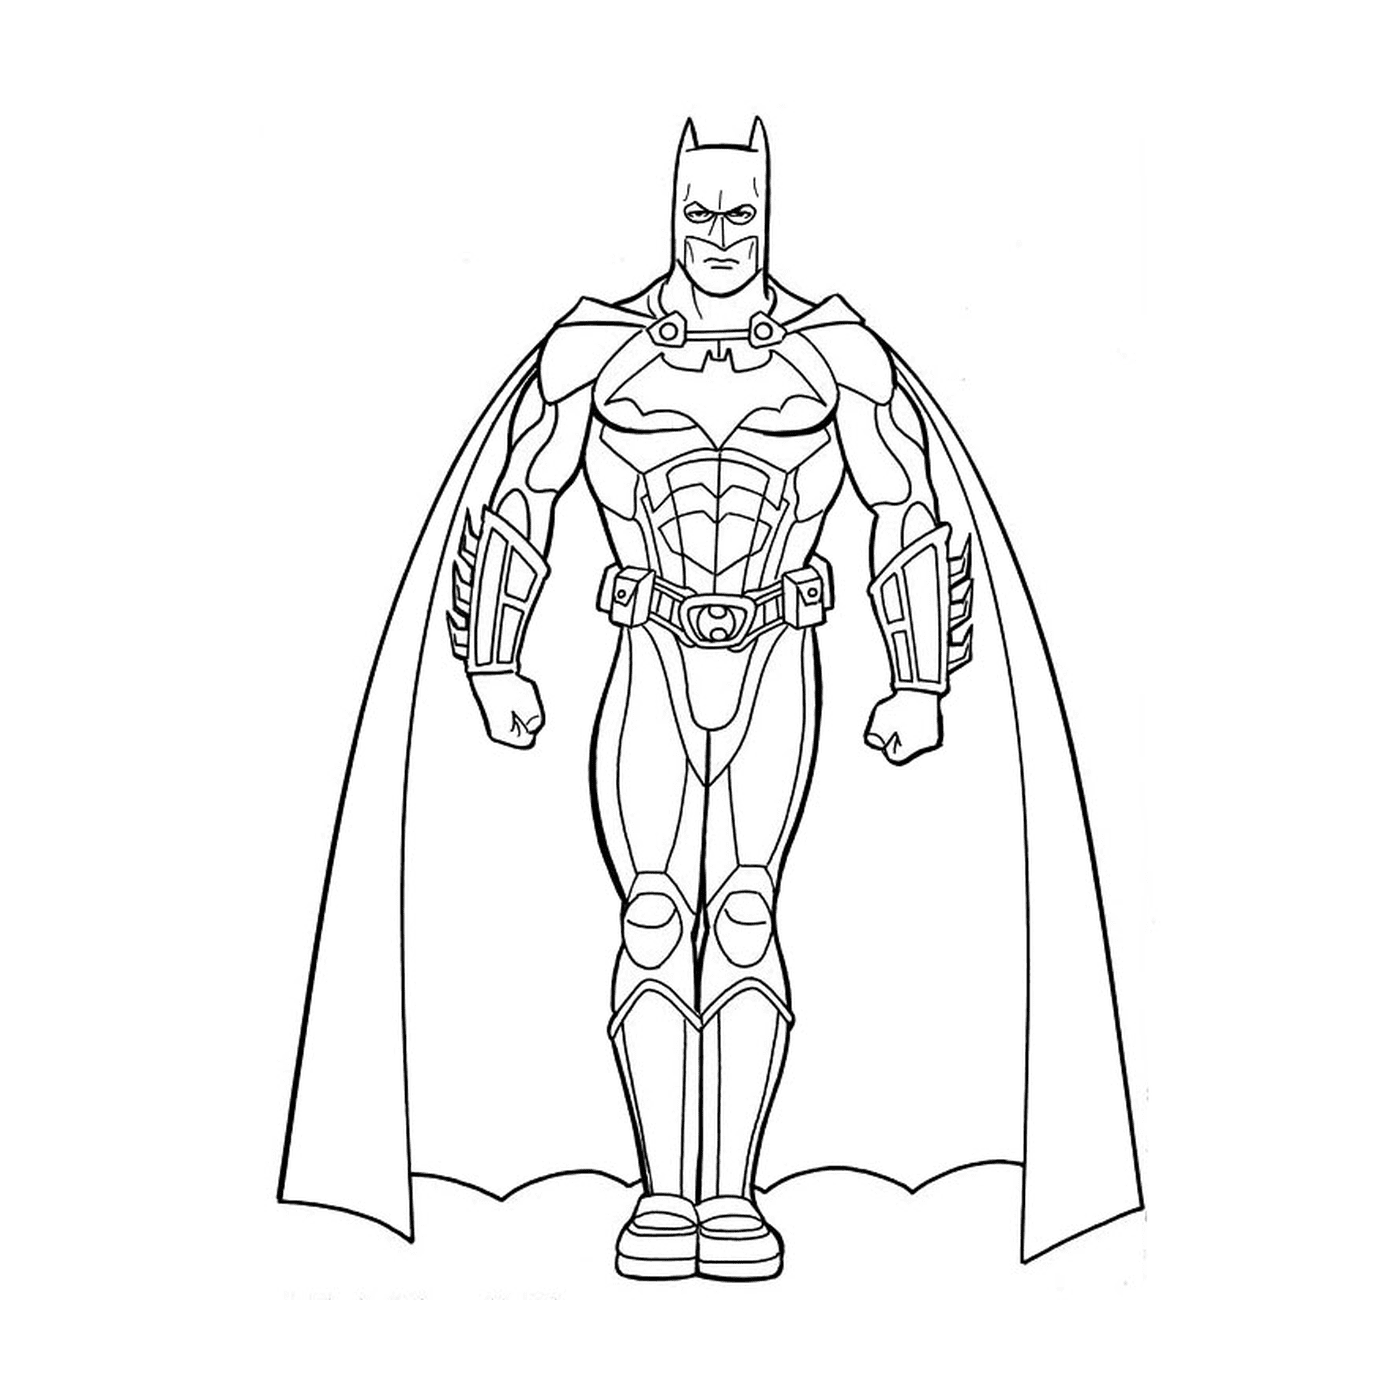  Человек в костюме Бэтмена 